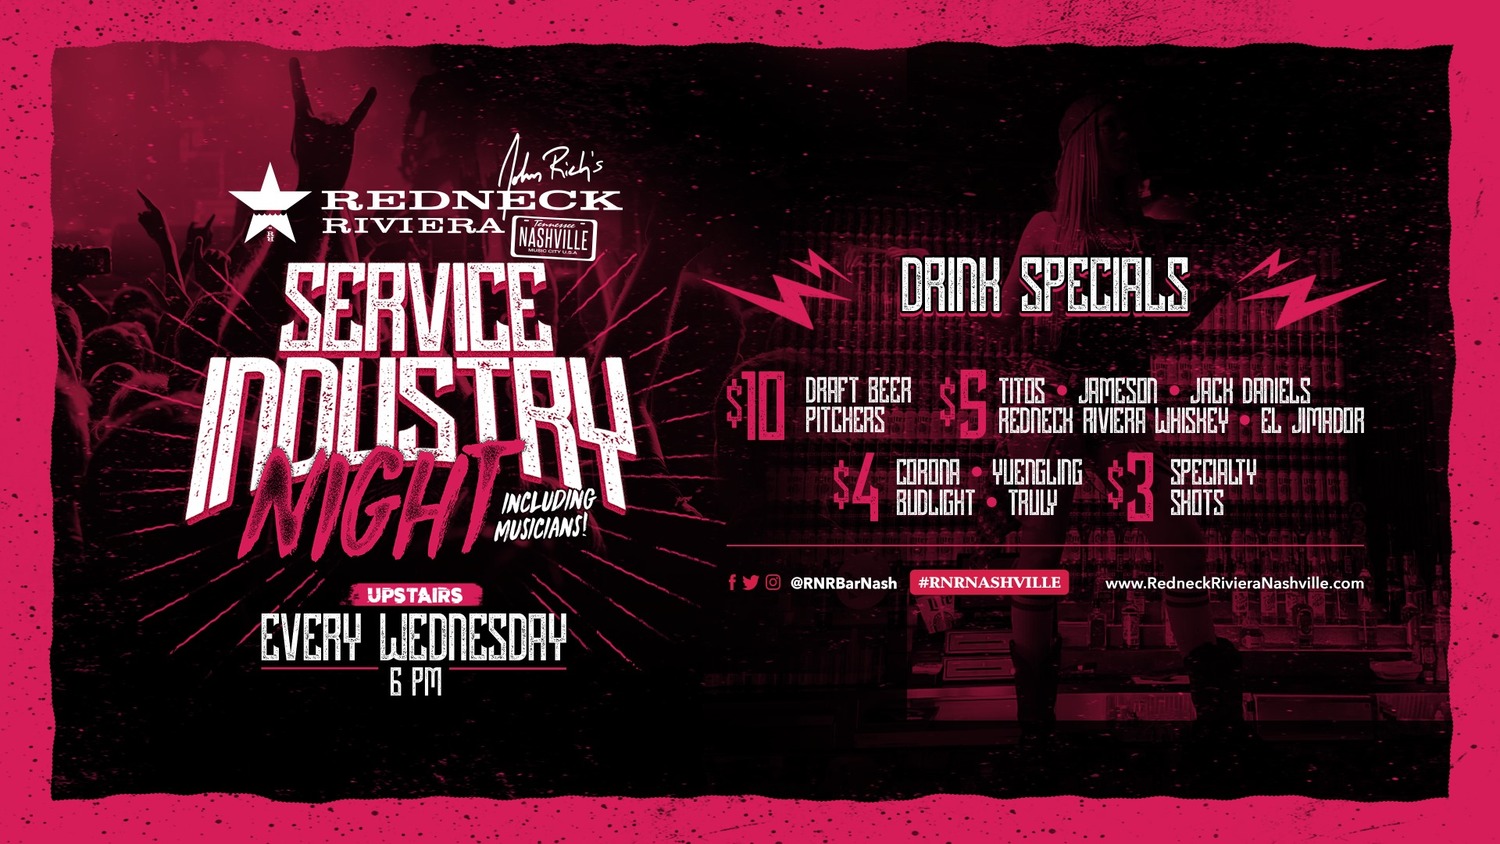 Service Industry Night!